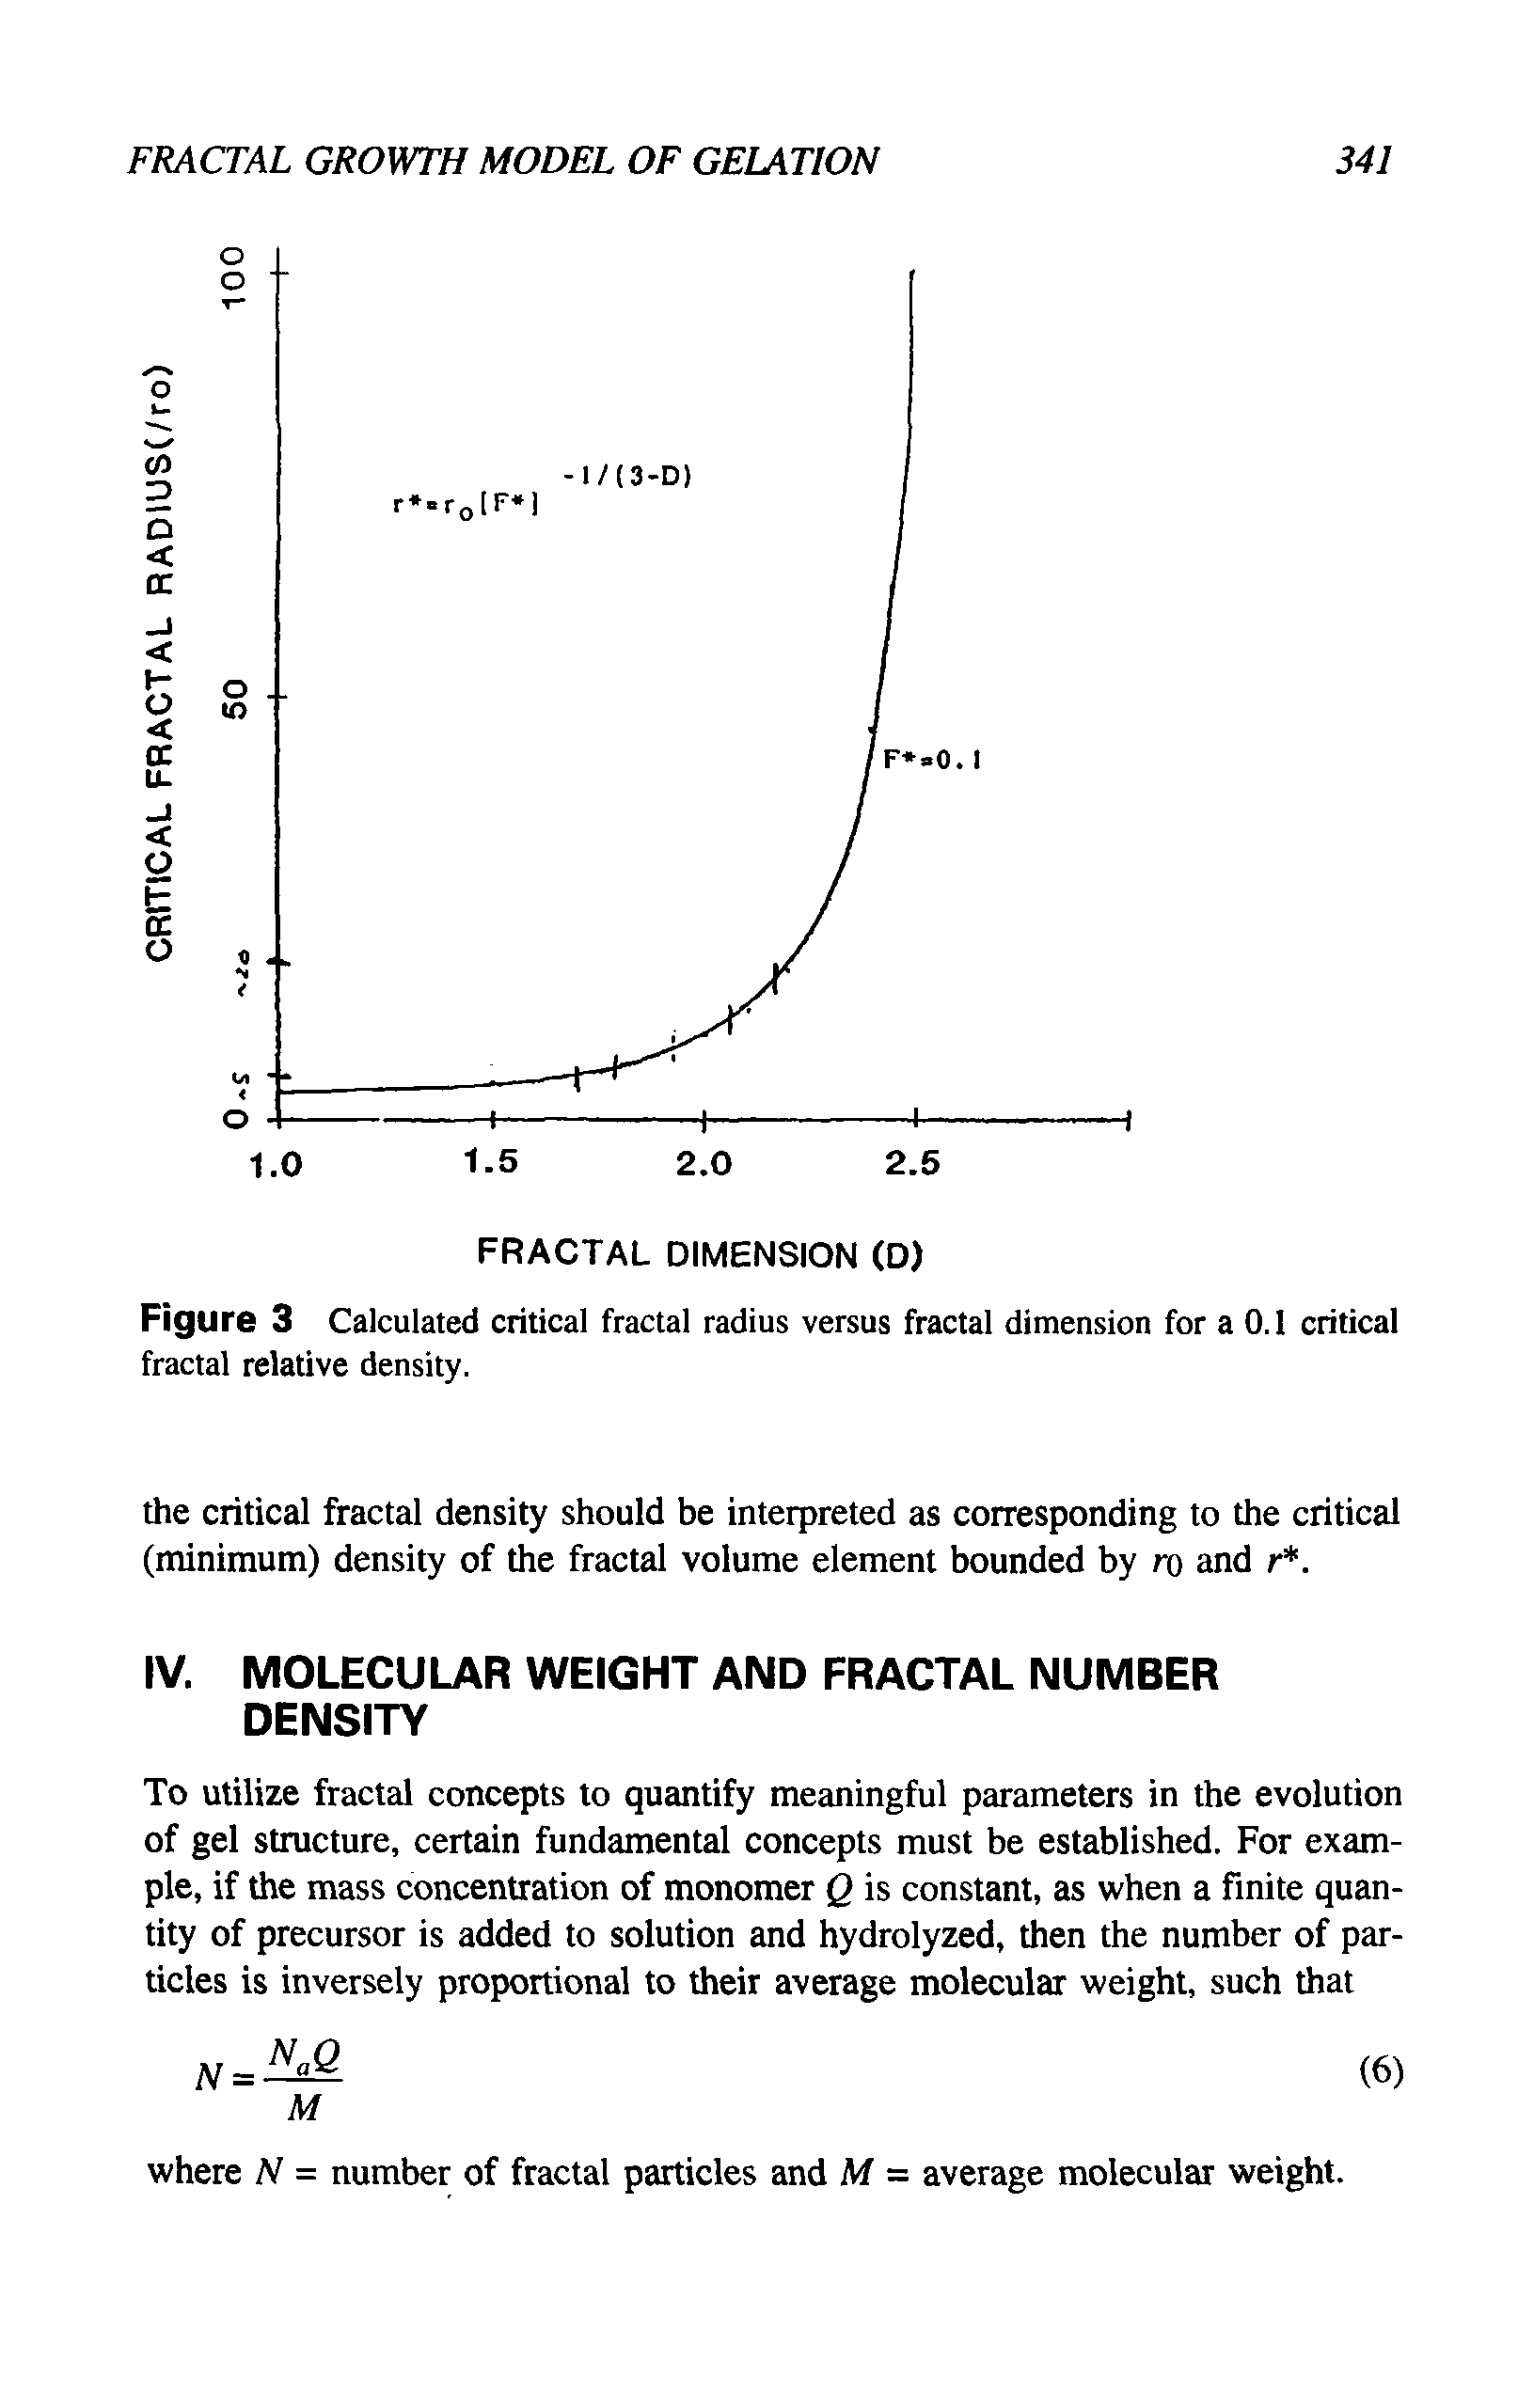 Figure 3 Calculated critical fractal radius versus fractal dimension for a 0.1 critical fractal relative density.